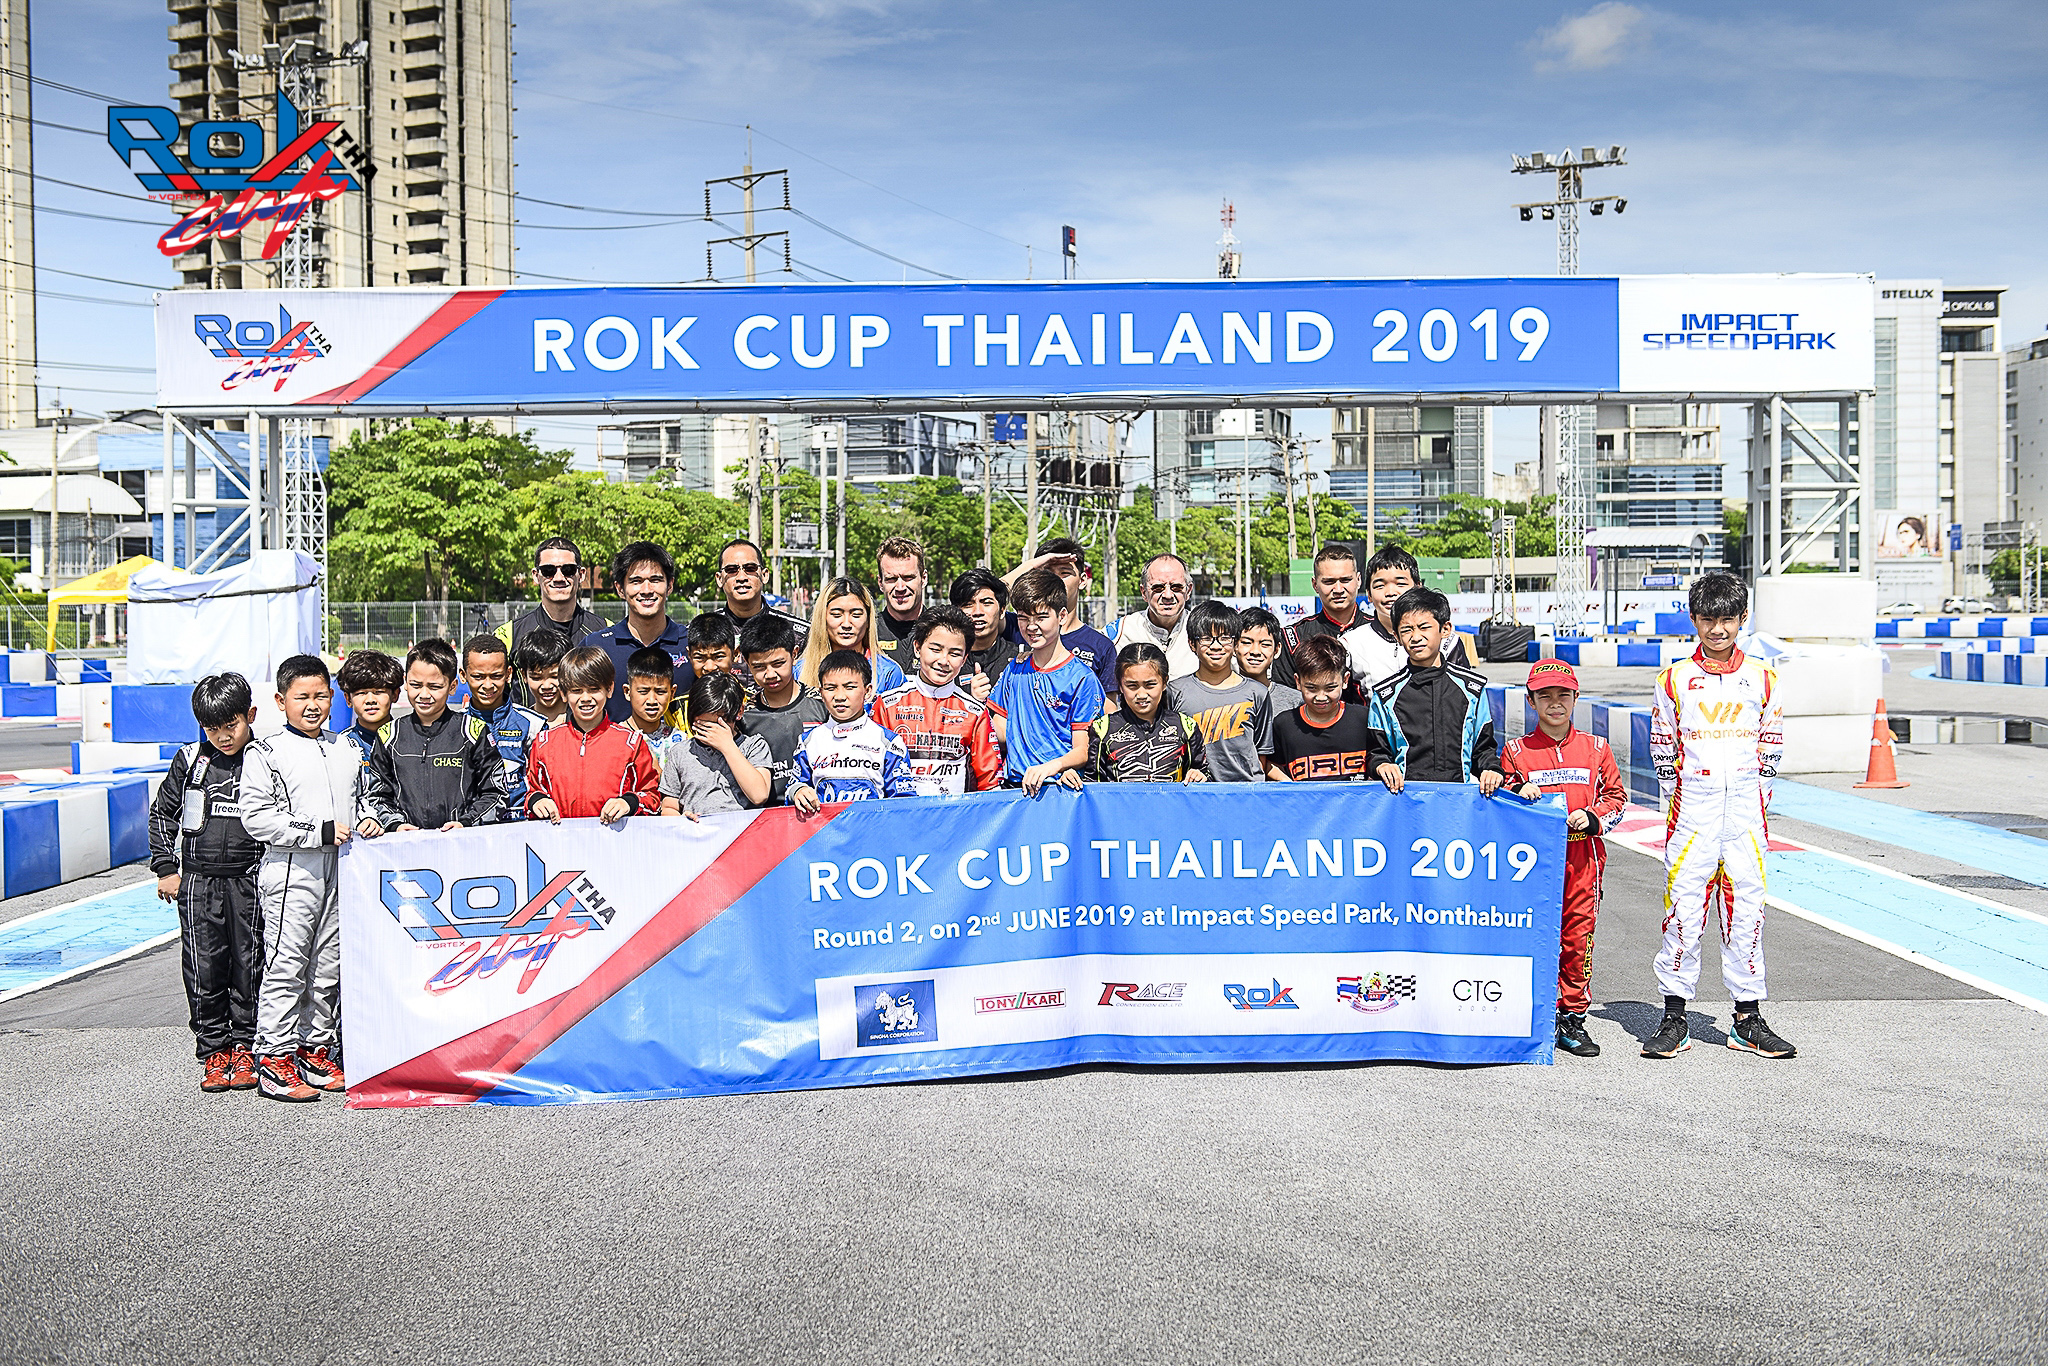 Rok Cup Thailand round 2 at Impact Speed Park, Nonthaburi